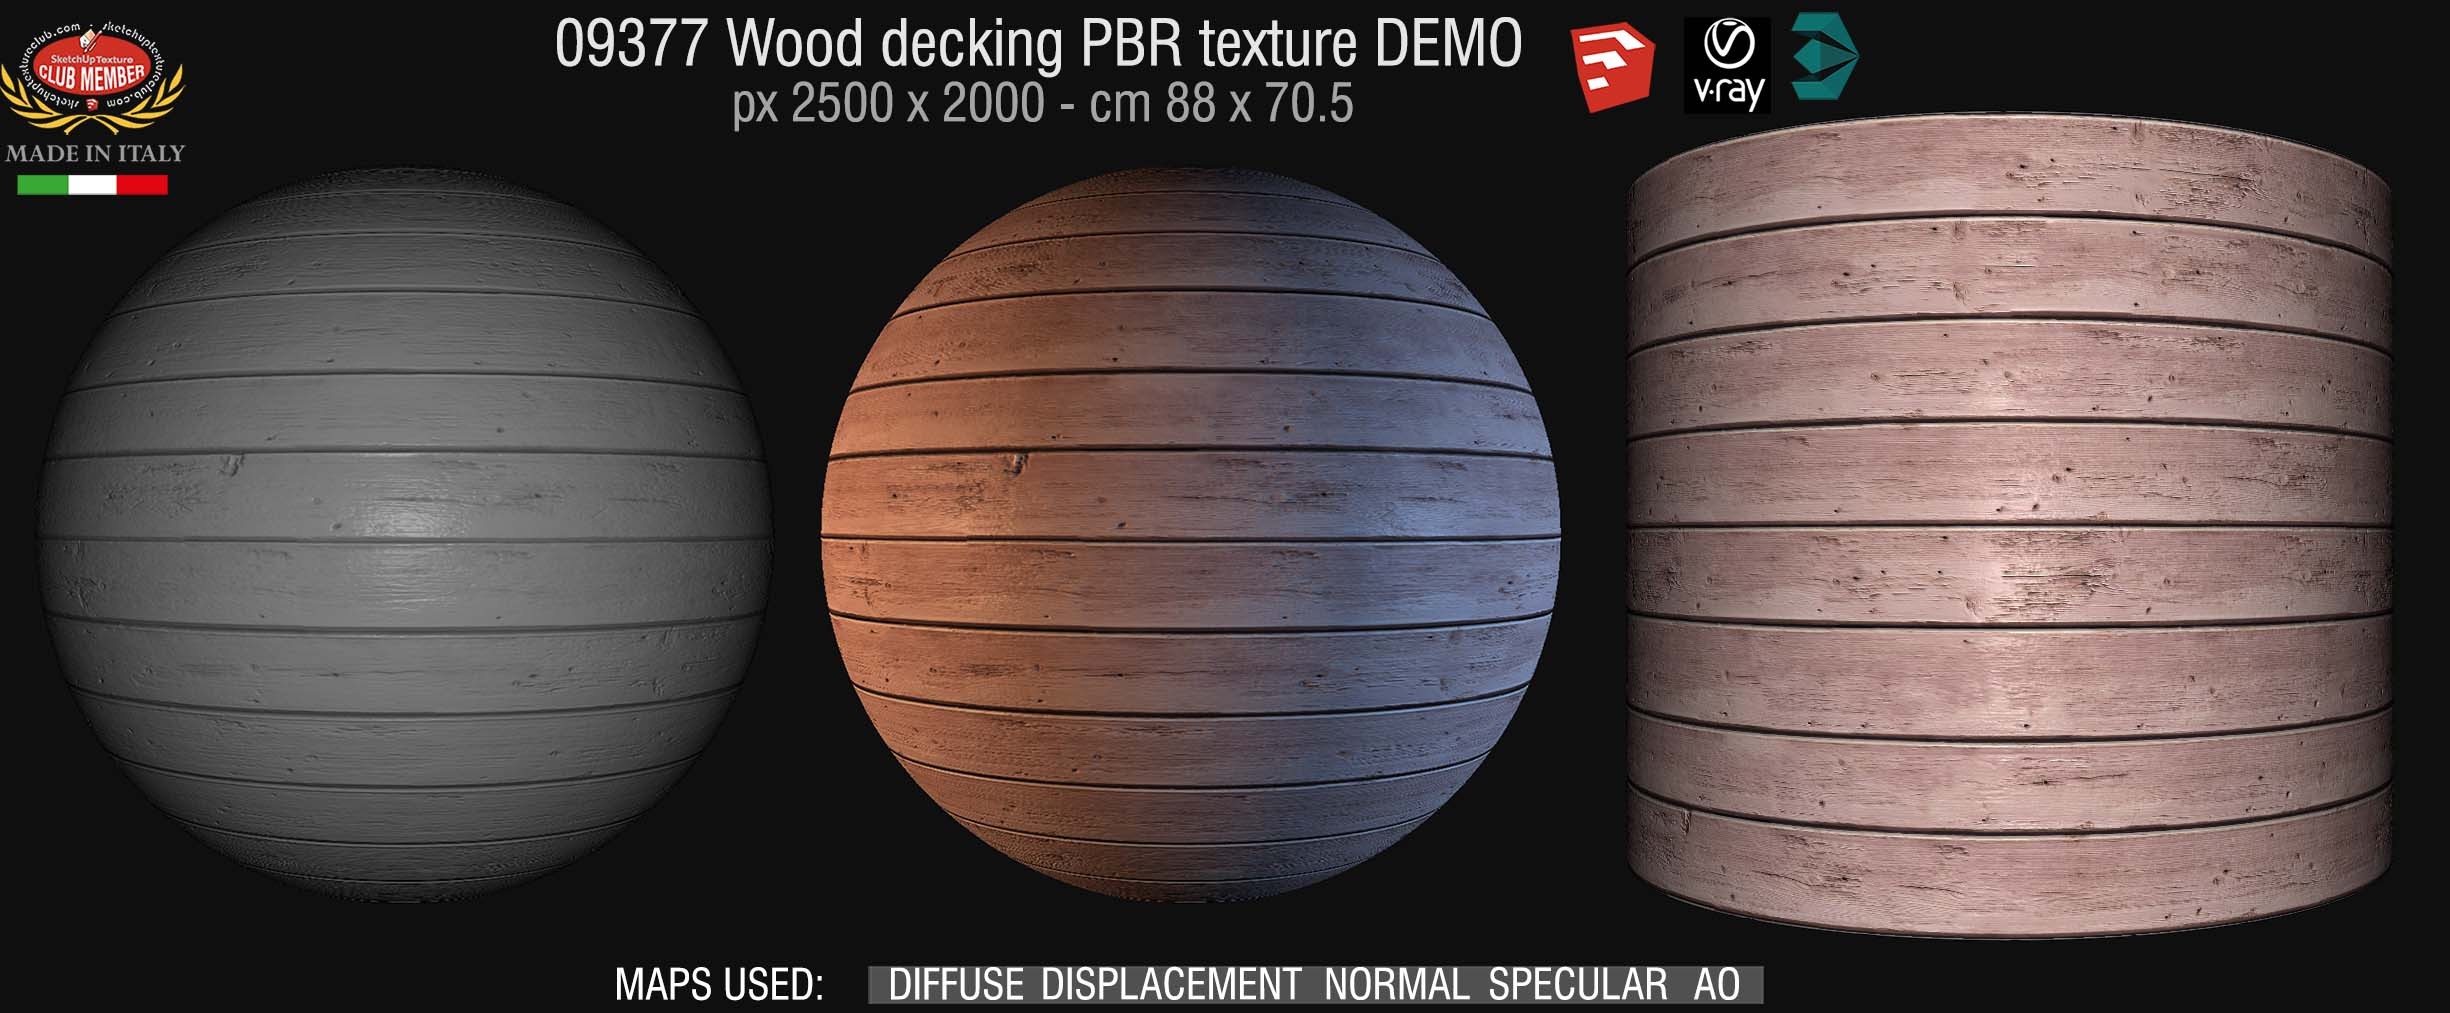 09377 Wood decking PBR texture seamless DEMO